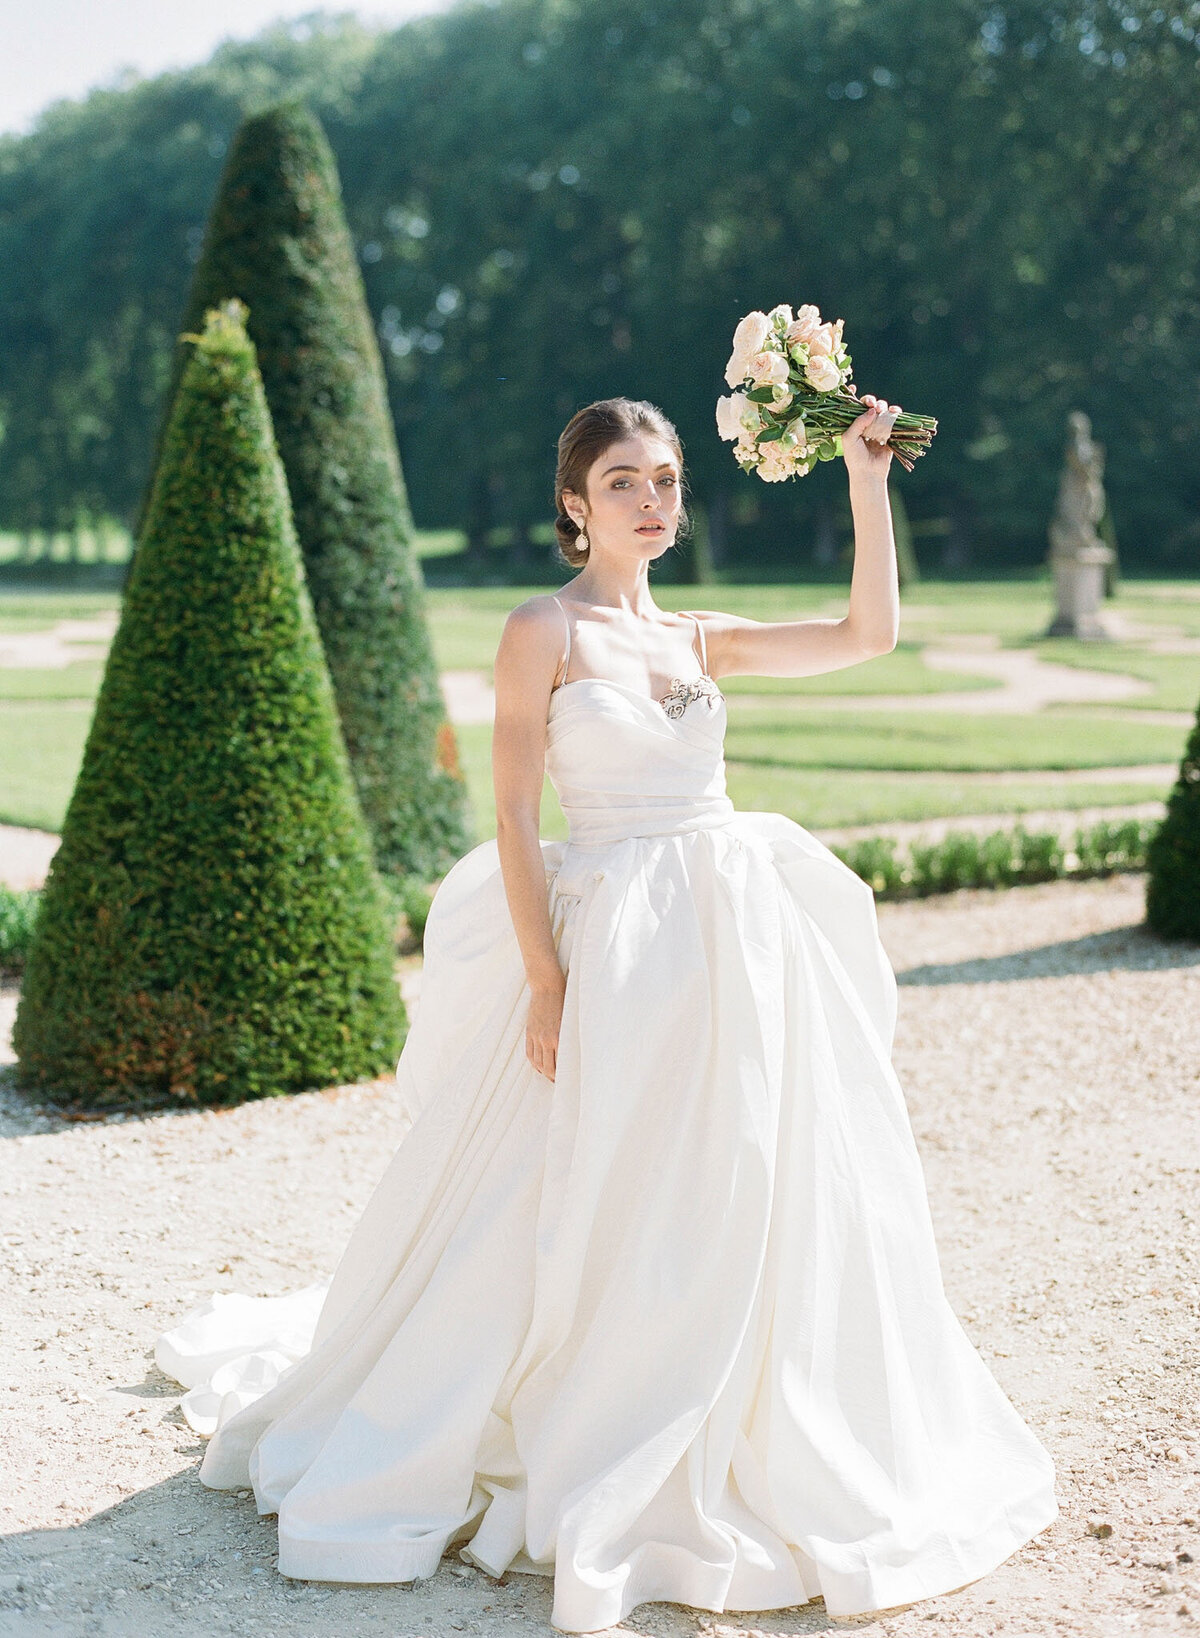 Chateau-Villette-Wedding-Photographer-Paris-Luxury-Wedding-Film-Photos-Molly-Carr-Photography-78